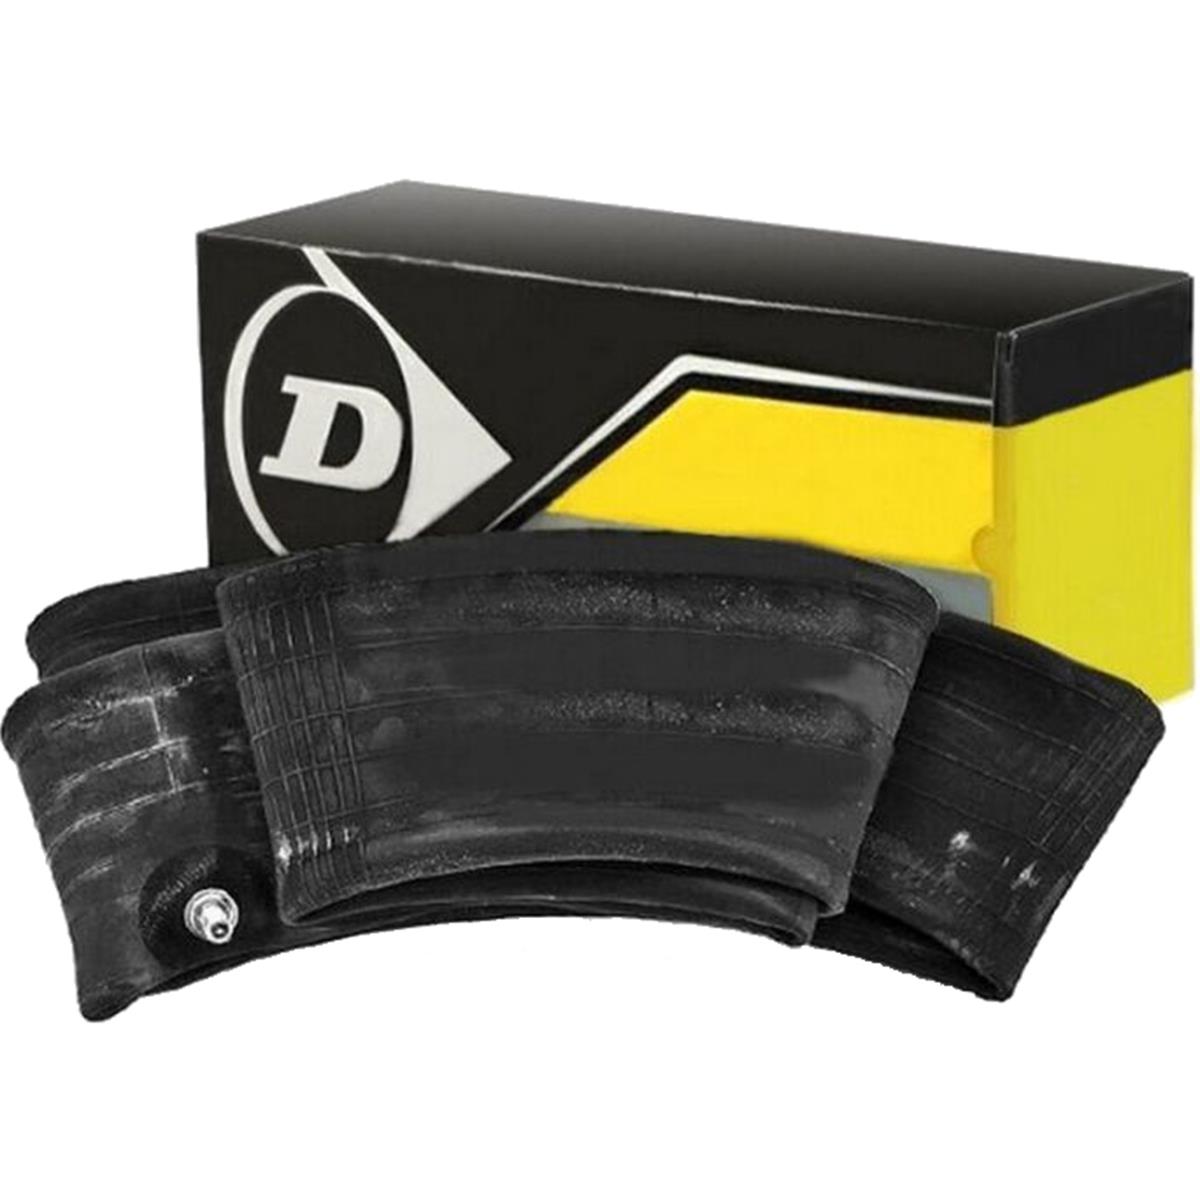 Dunlop Tube  2.50-14, 60/100-14, 80/80-14, TR4